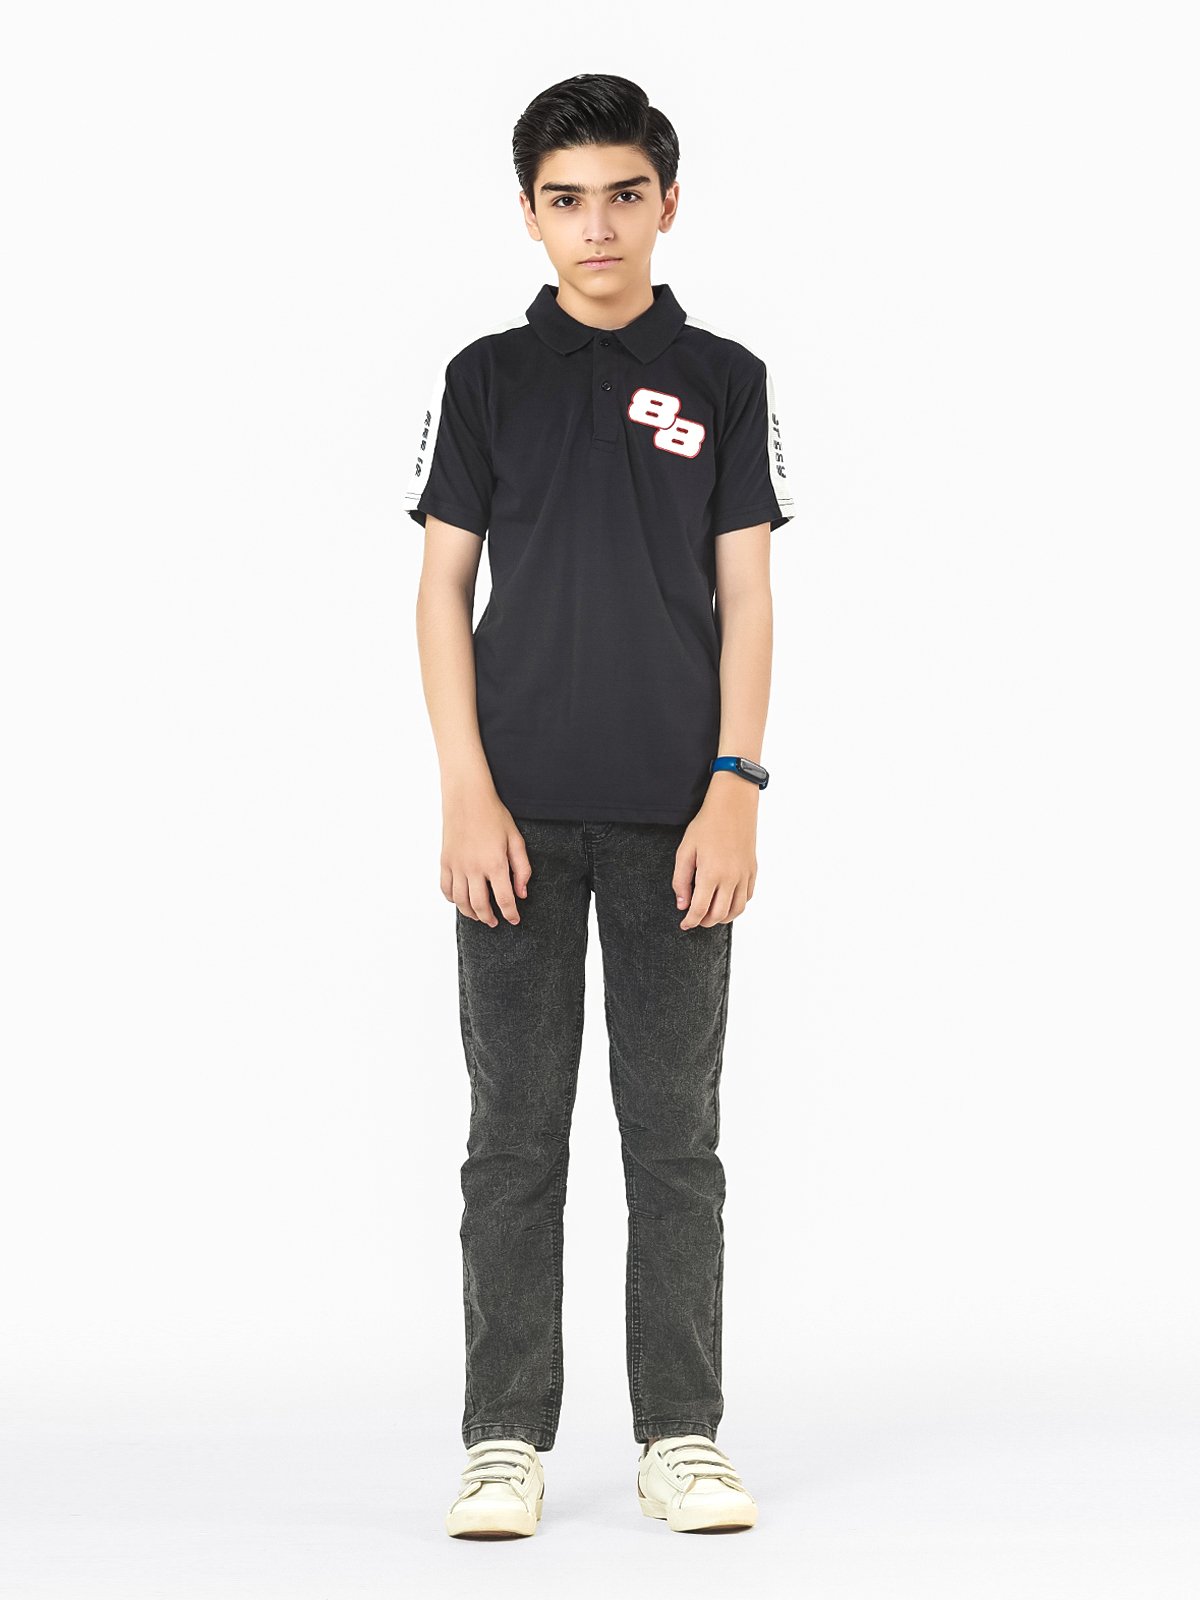 Boy's Black Polo Shirt - EBTPS22-036